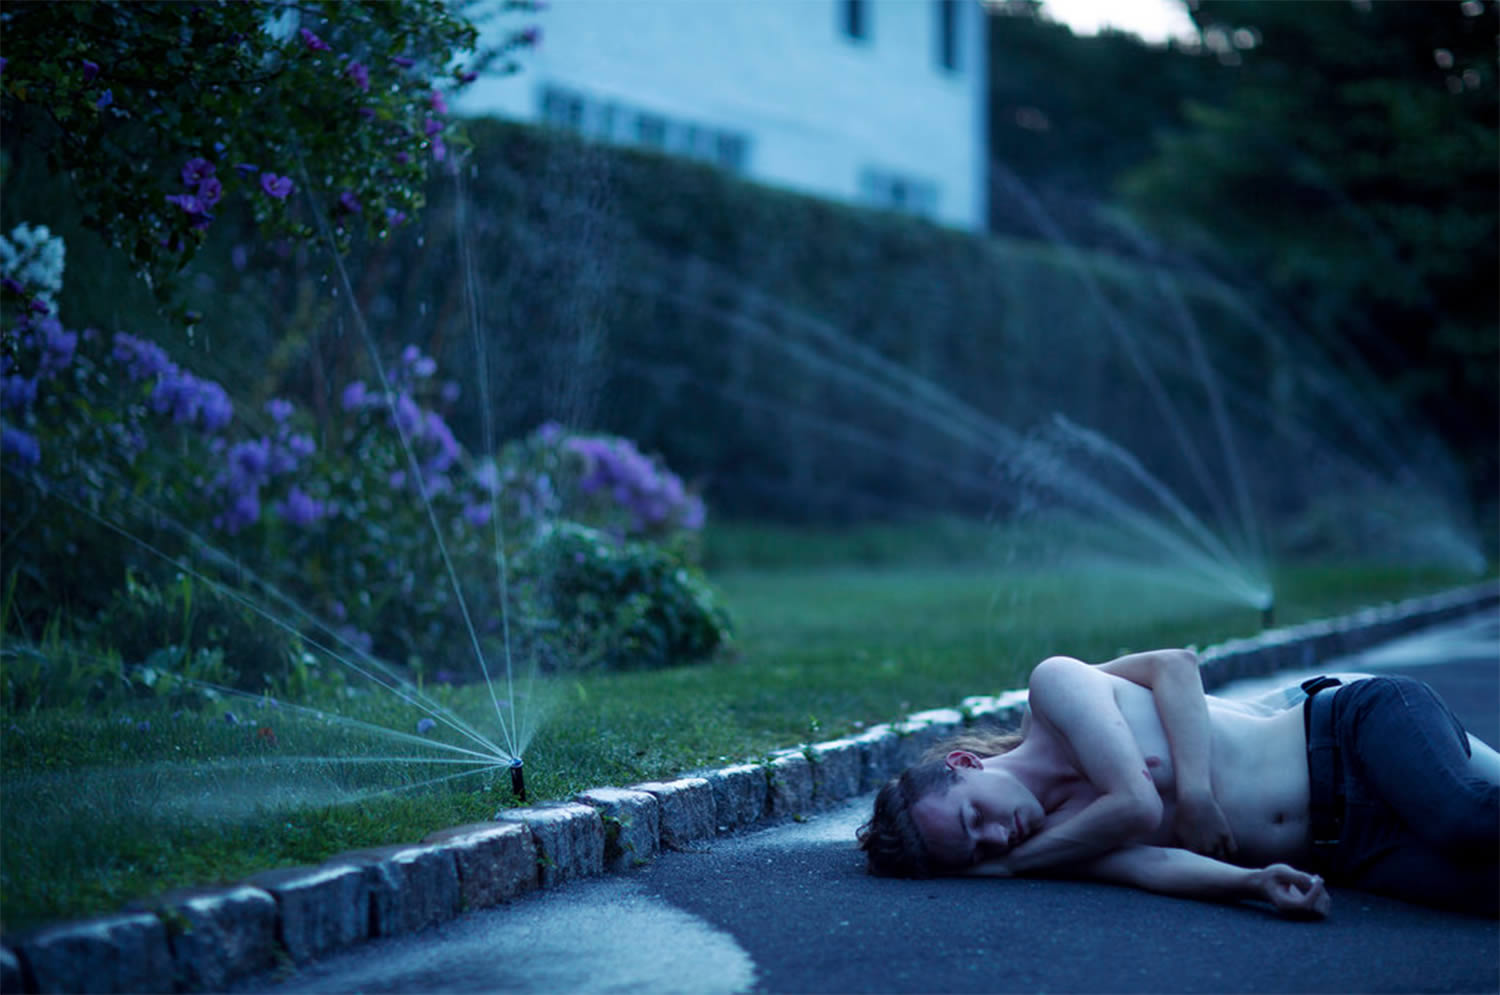 man lying on ground, sprinklers on, "Sunrise Dream" by Olivia Bee.